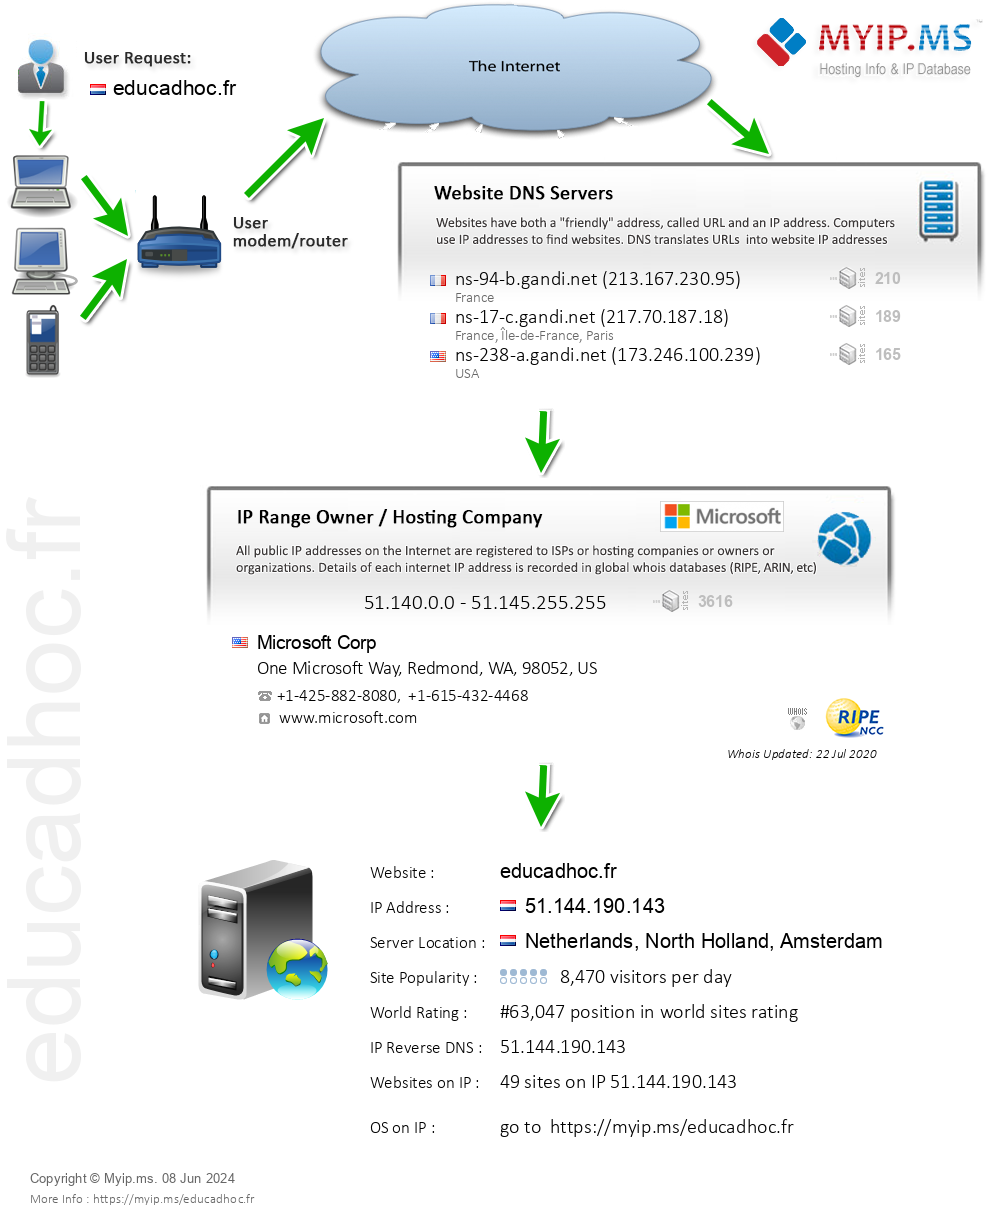 Educadhoc.fr - Website Hosting Visual IP Diagram